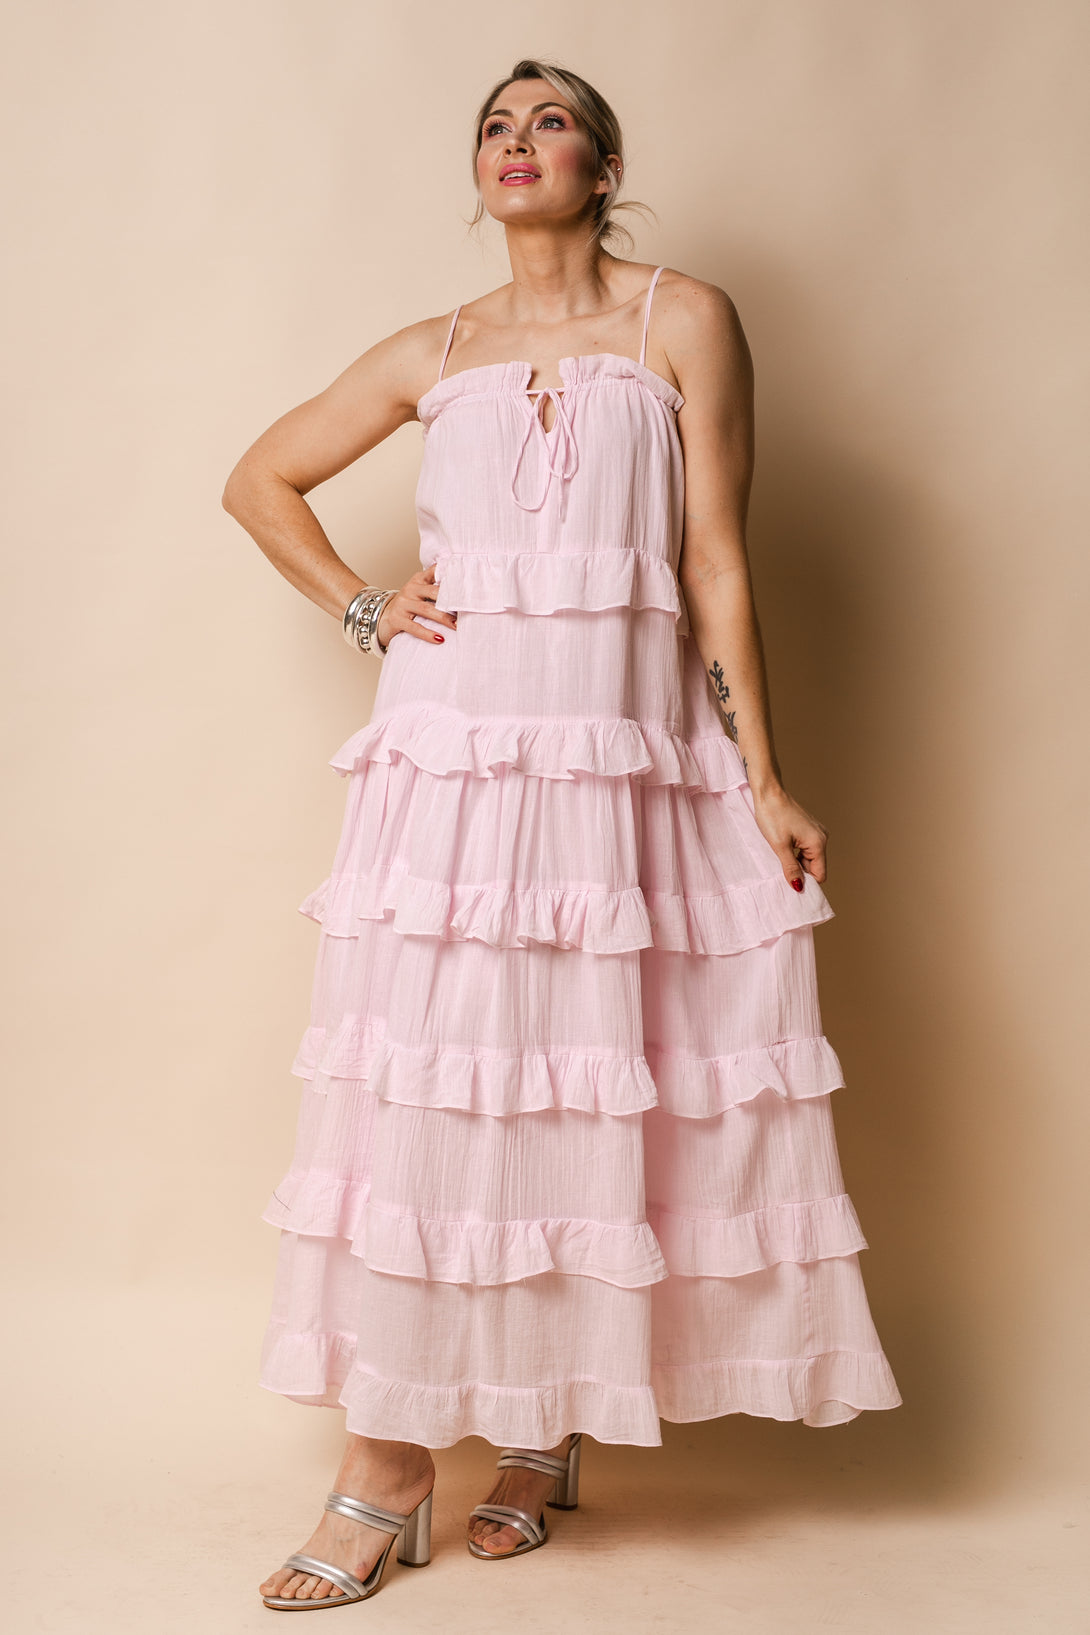 Callie Cotton Dress in Blush - Imagine Fashion